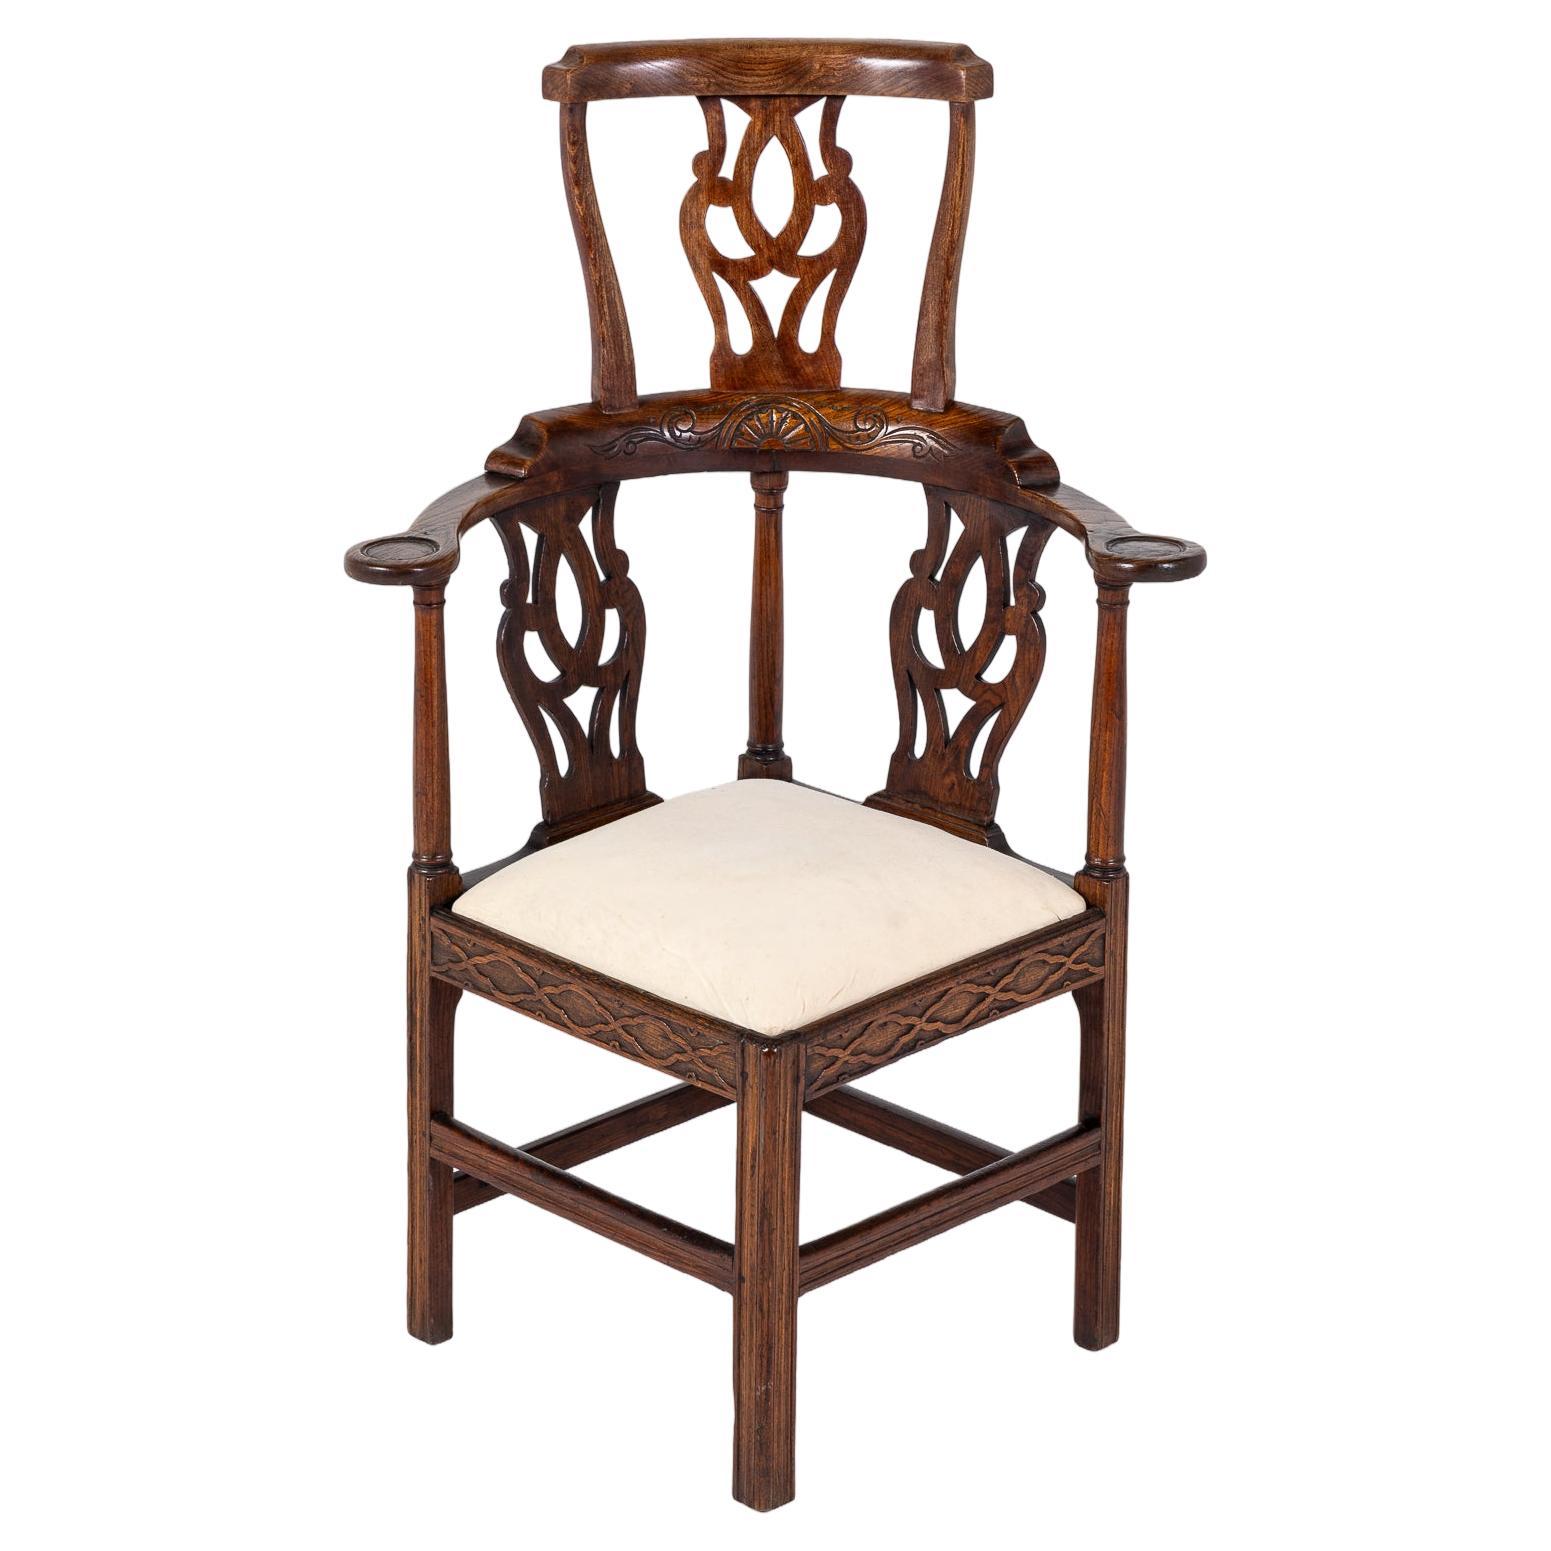 Late 18th Century English Oak Corner Chair